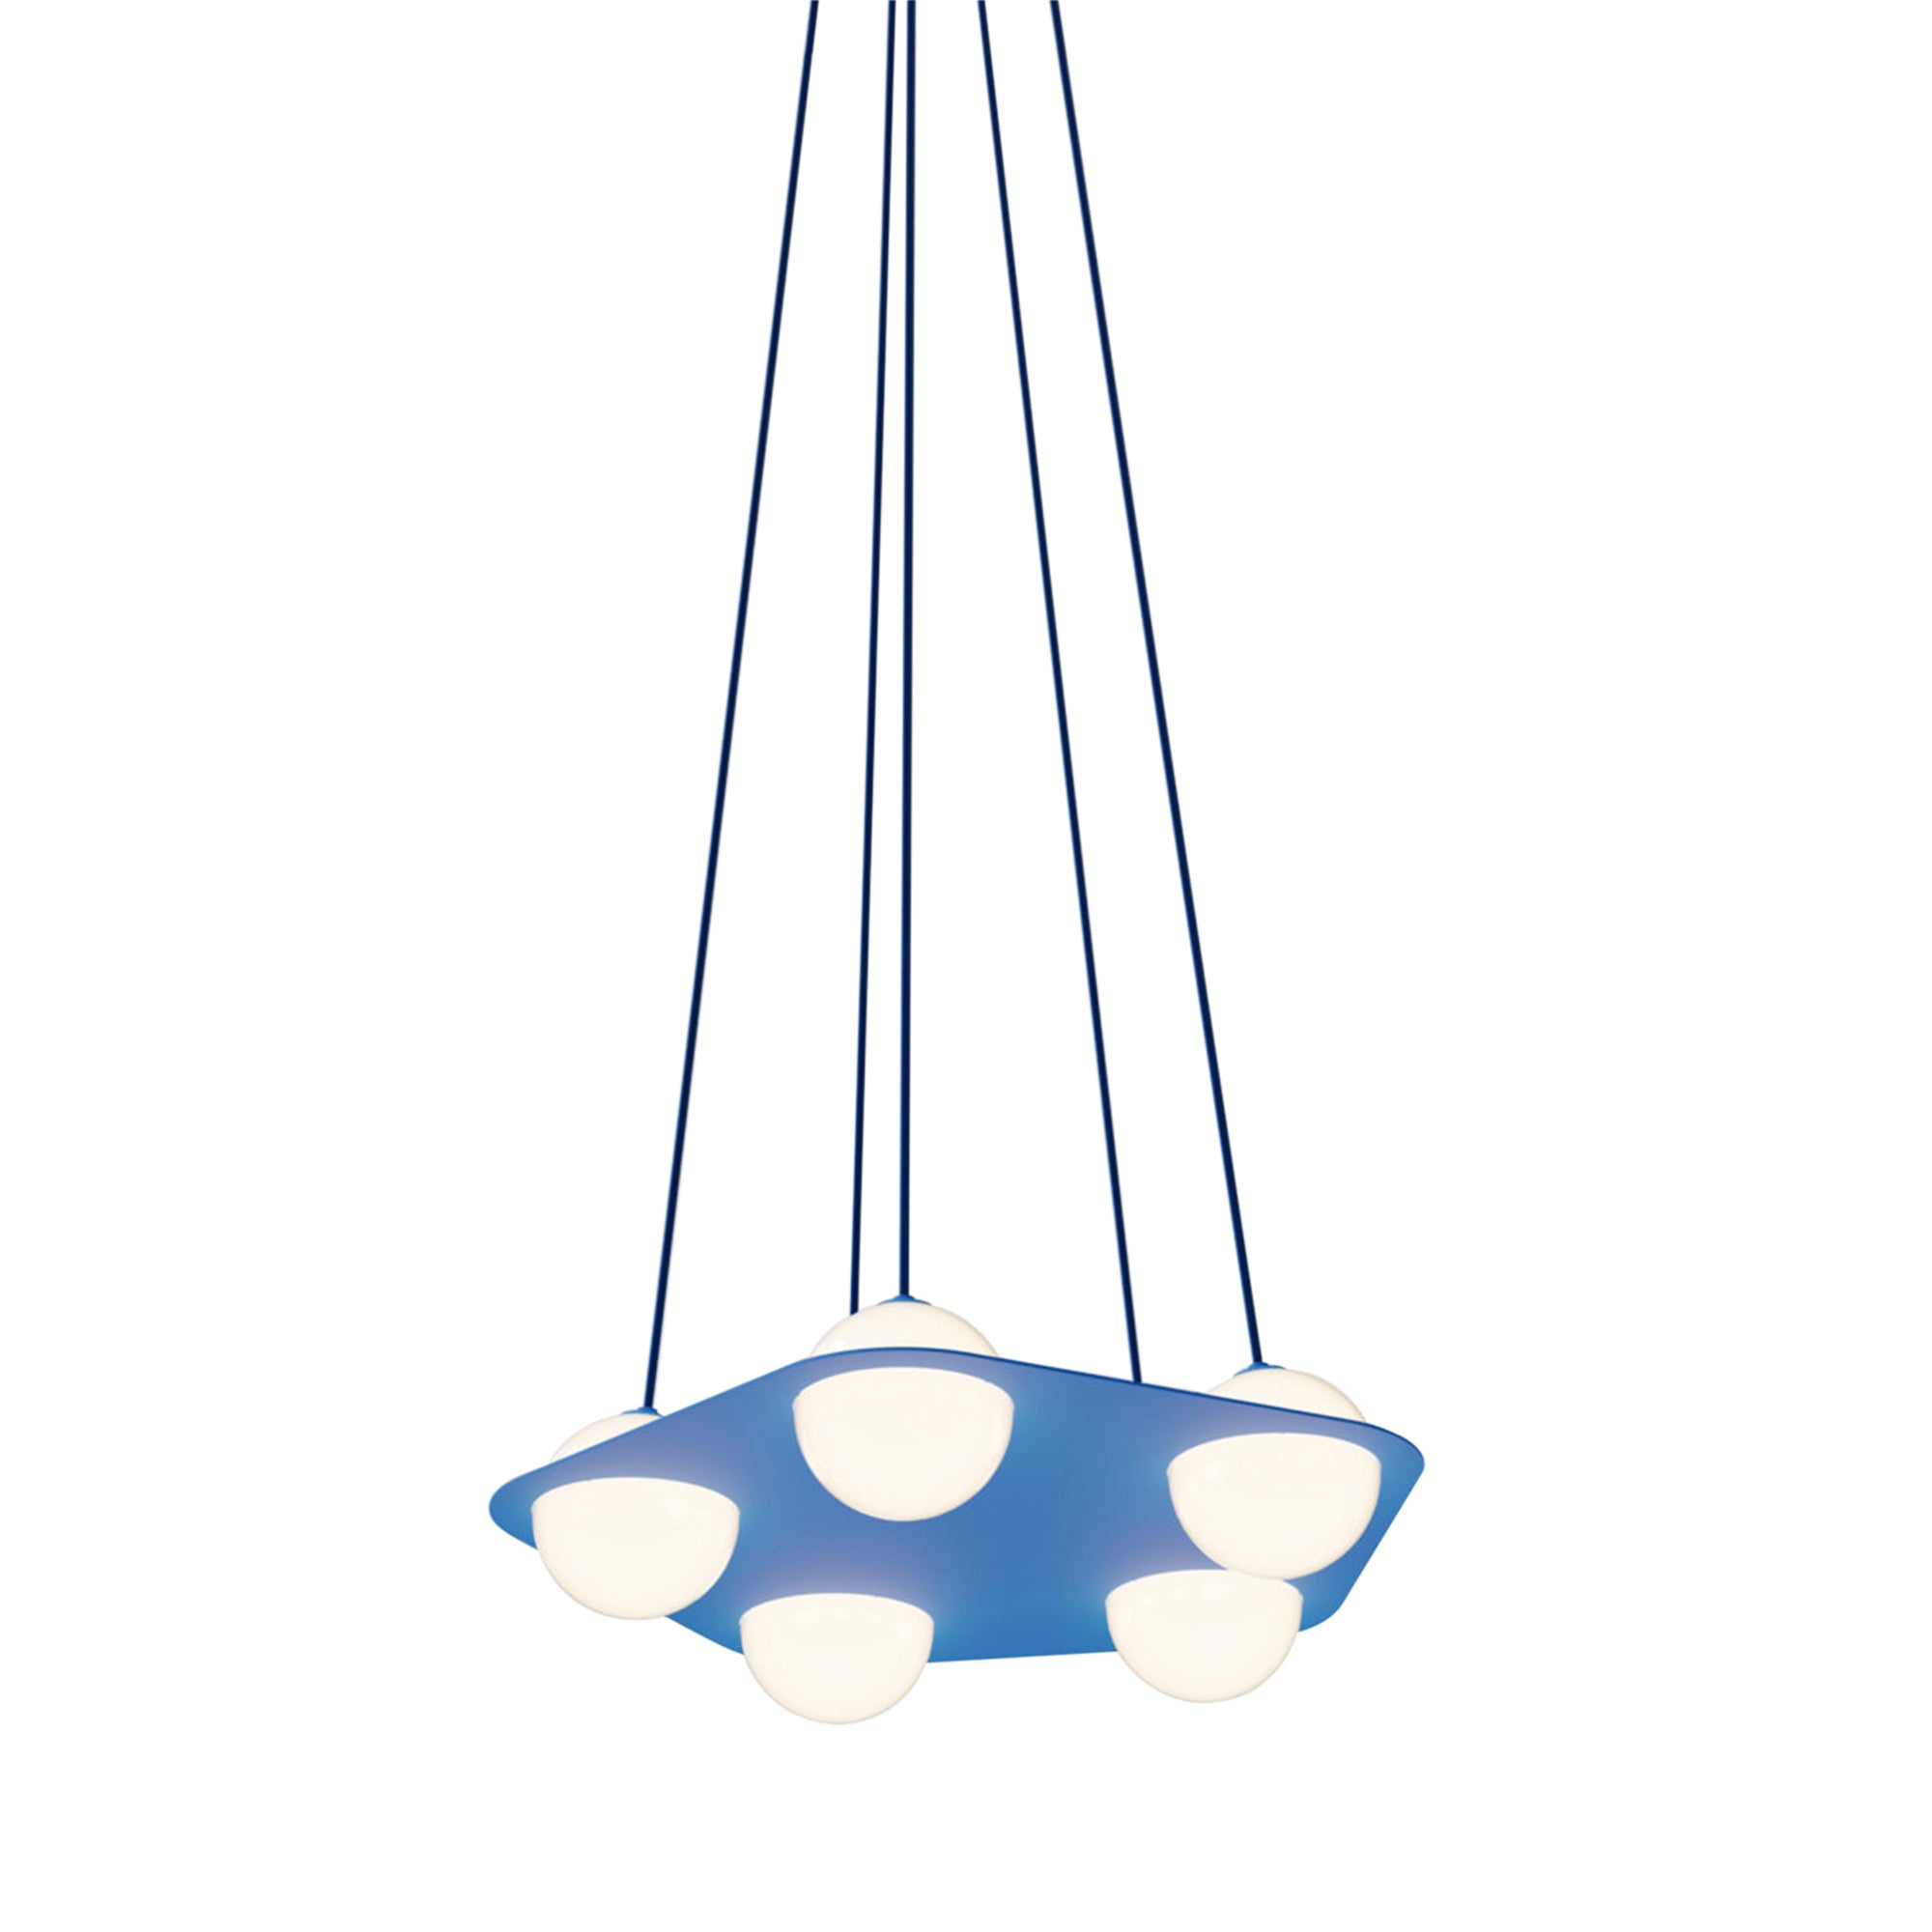 Laurent 04 Suspension Lamp: Blue + Blue + Angled Wires